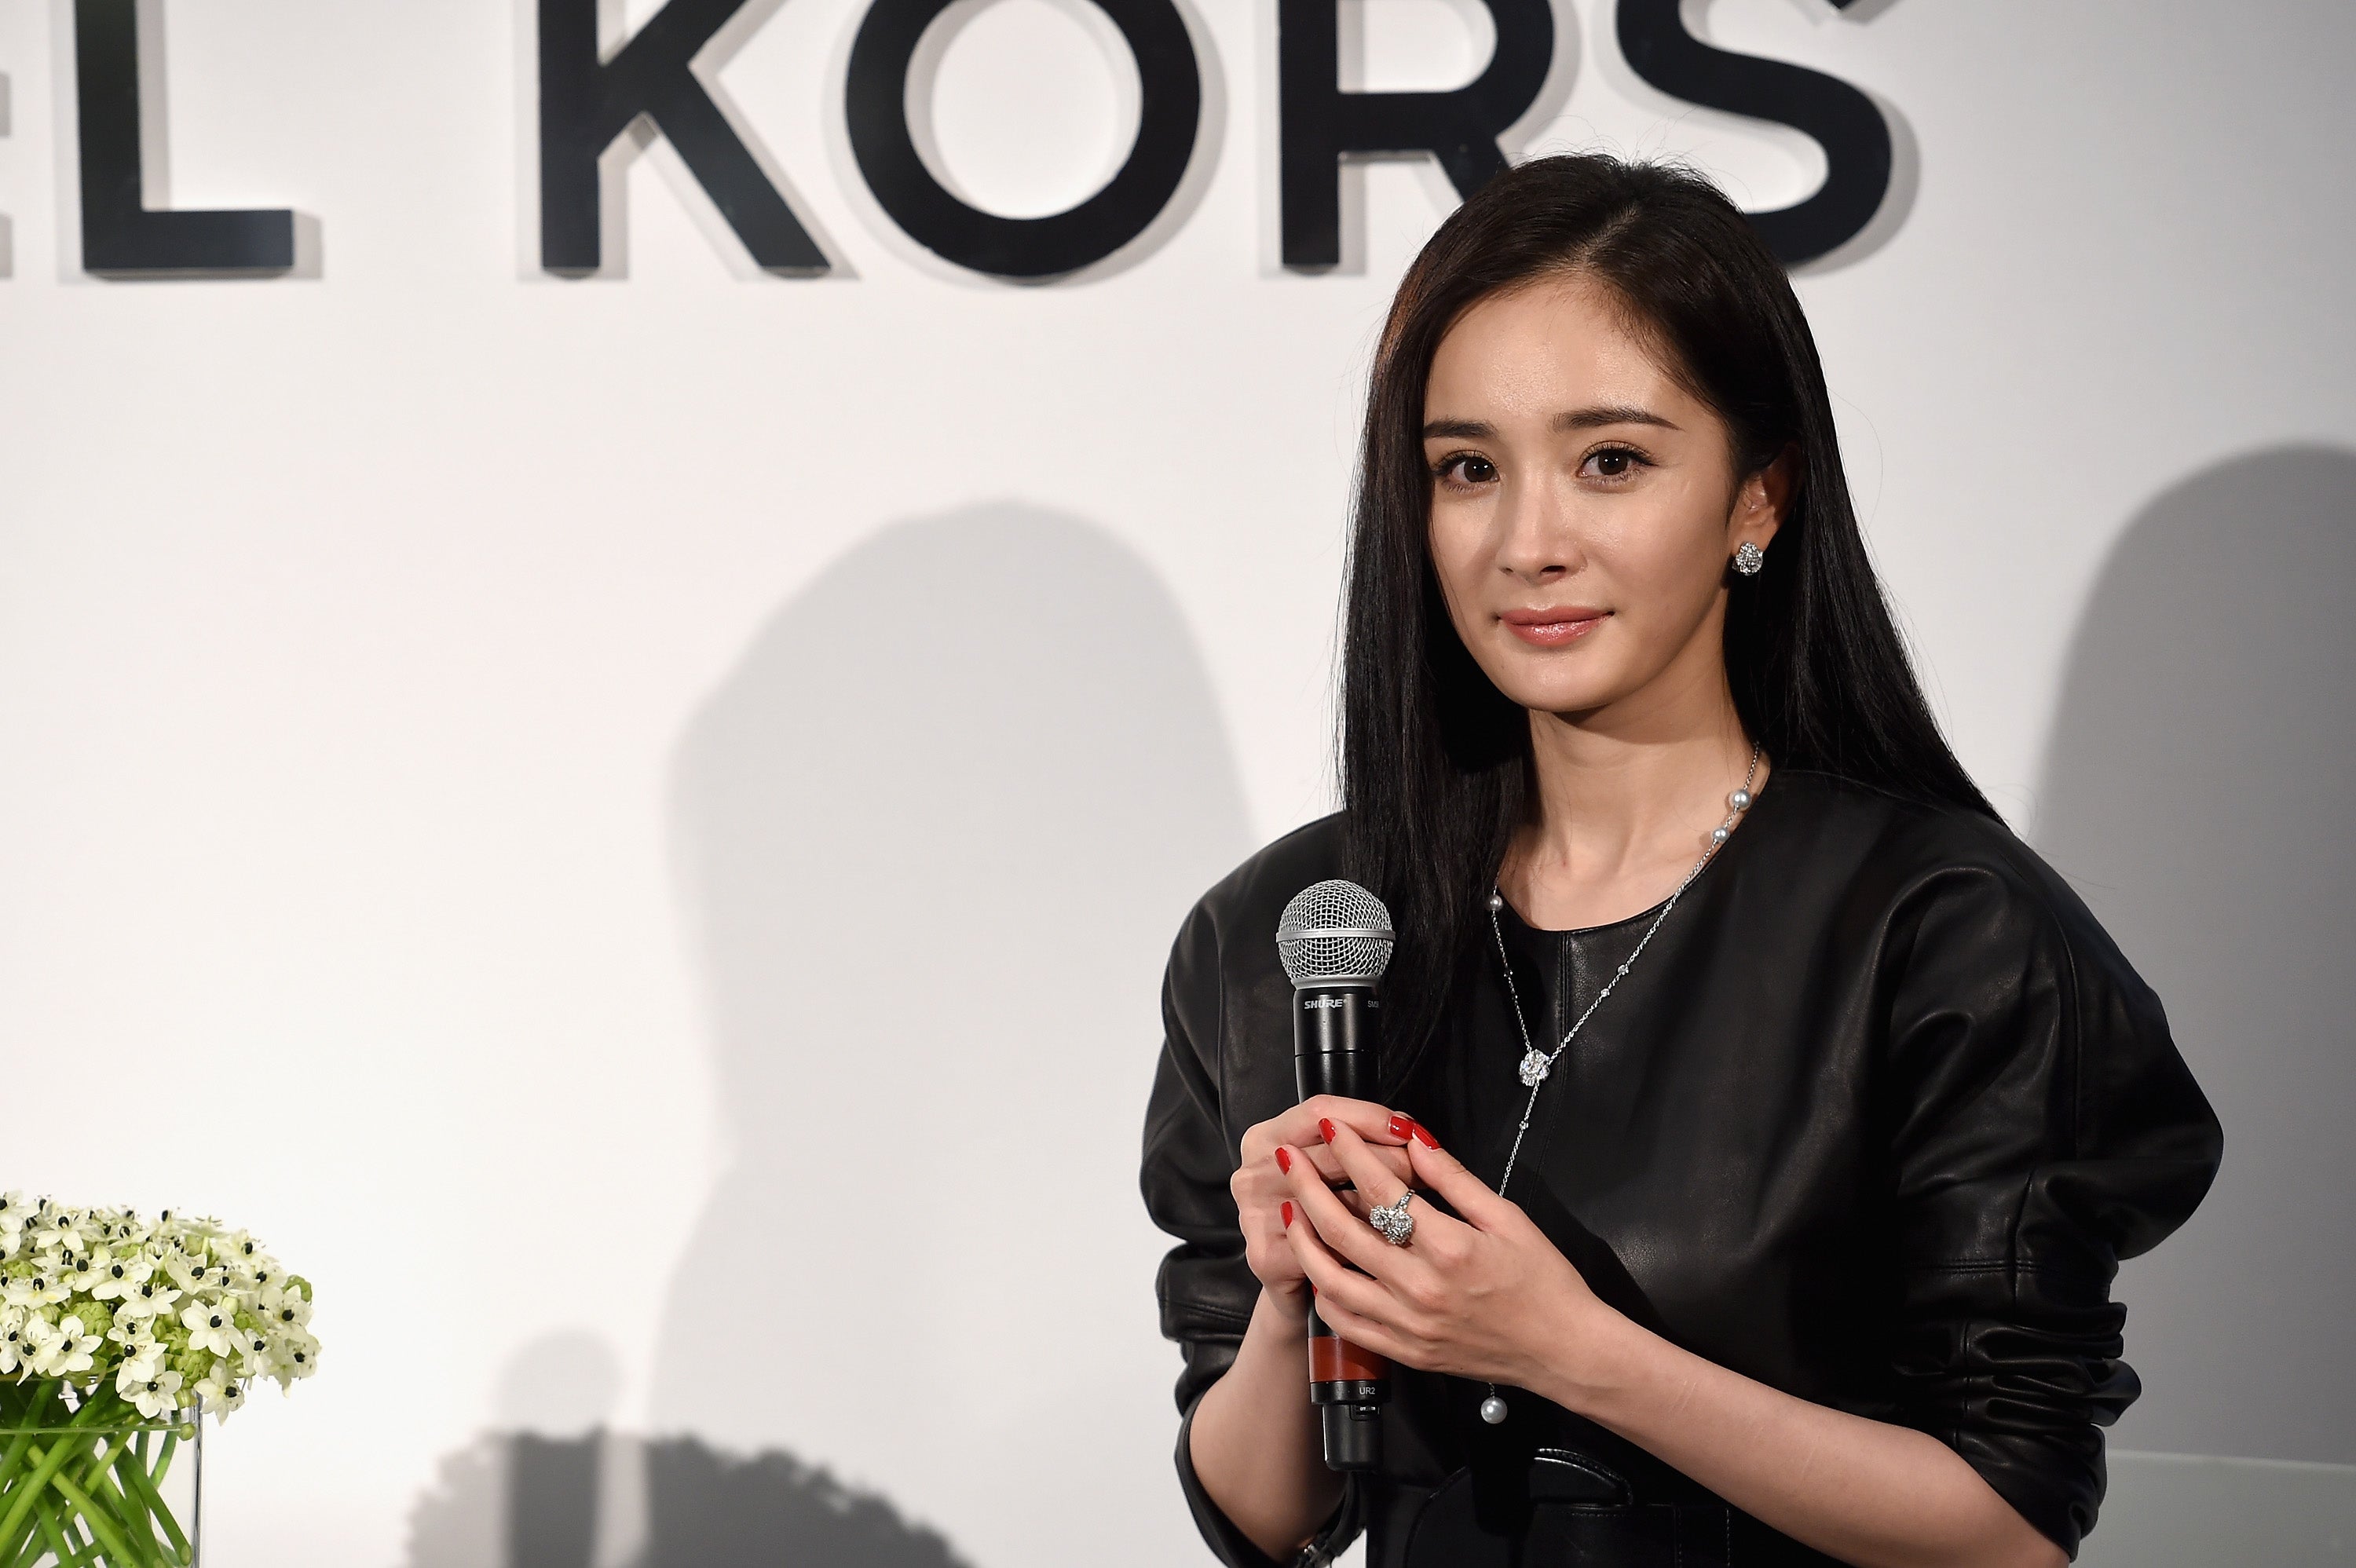 File image: Midland Chinese actress Yang Mi as Brand Ambassador for Michael Kors